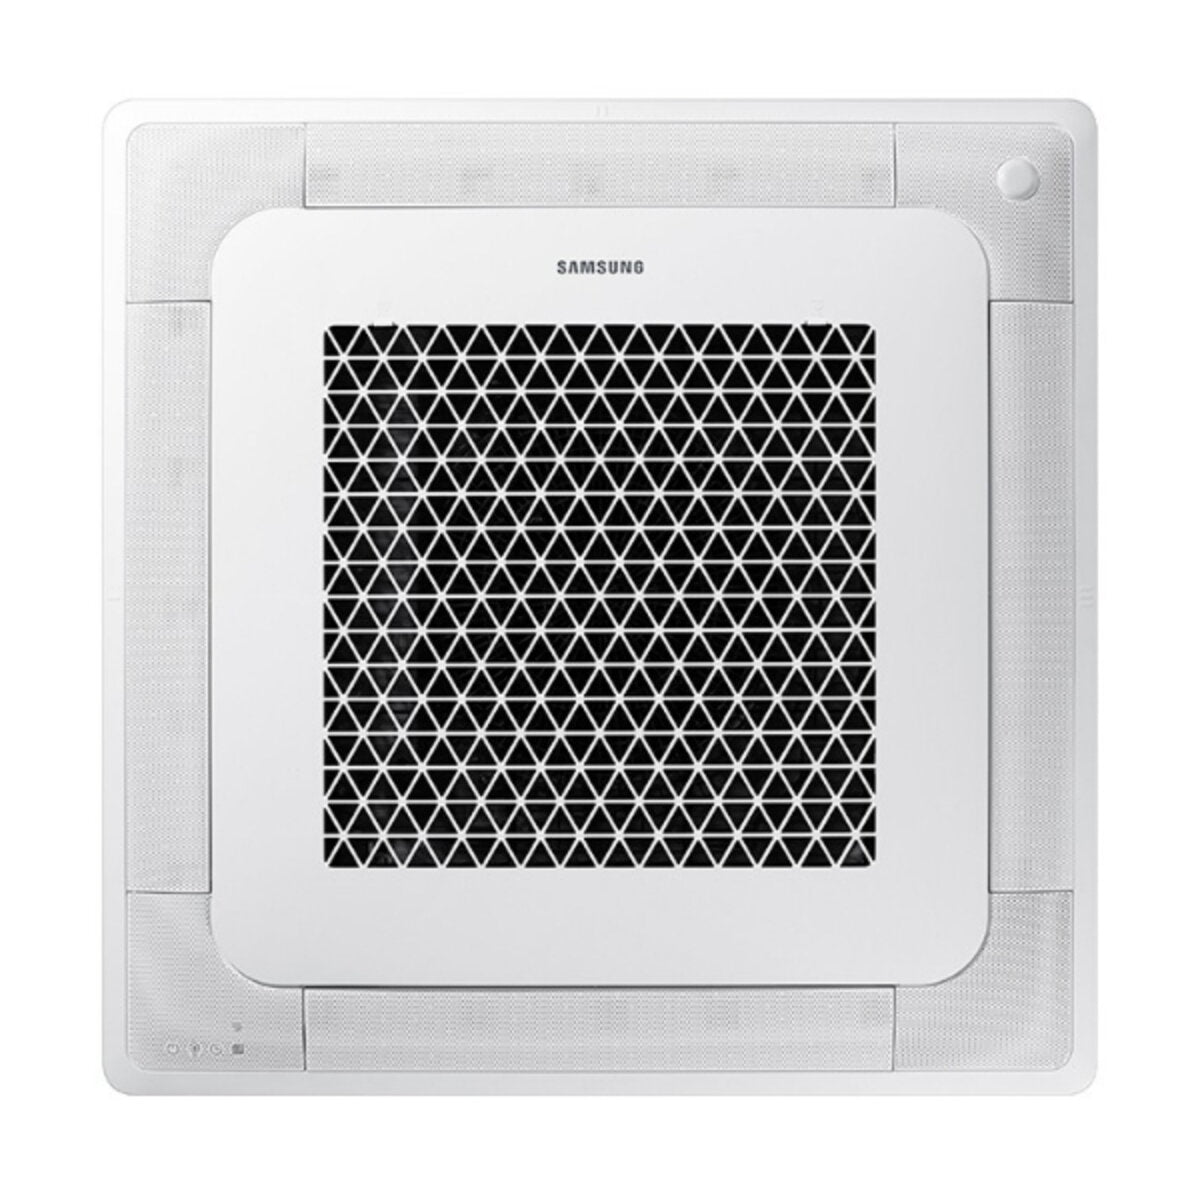 Samsung Air conditioner Windfree 4-way square split 9000 + 9000 + 9000 + 9000 BTU inverter A ++ outdoor unit 8.0 kW